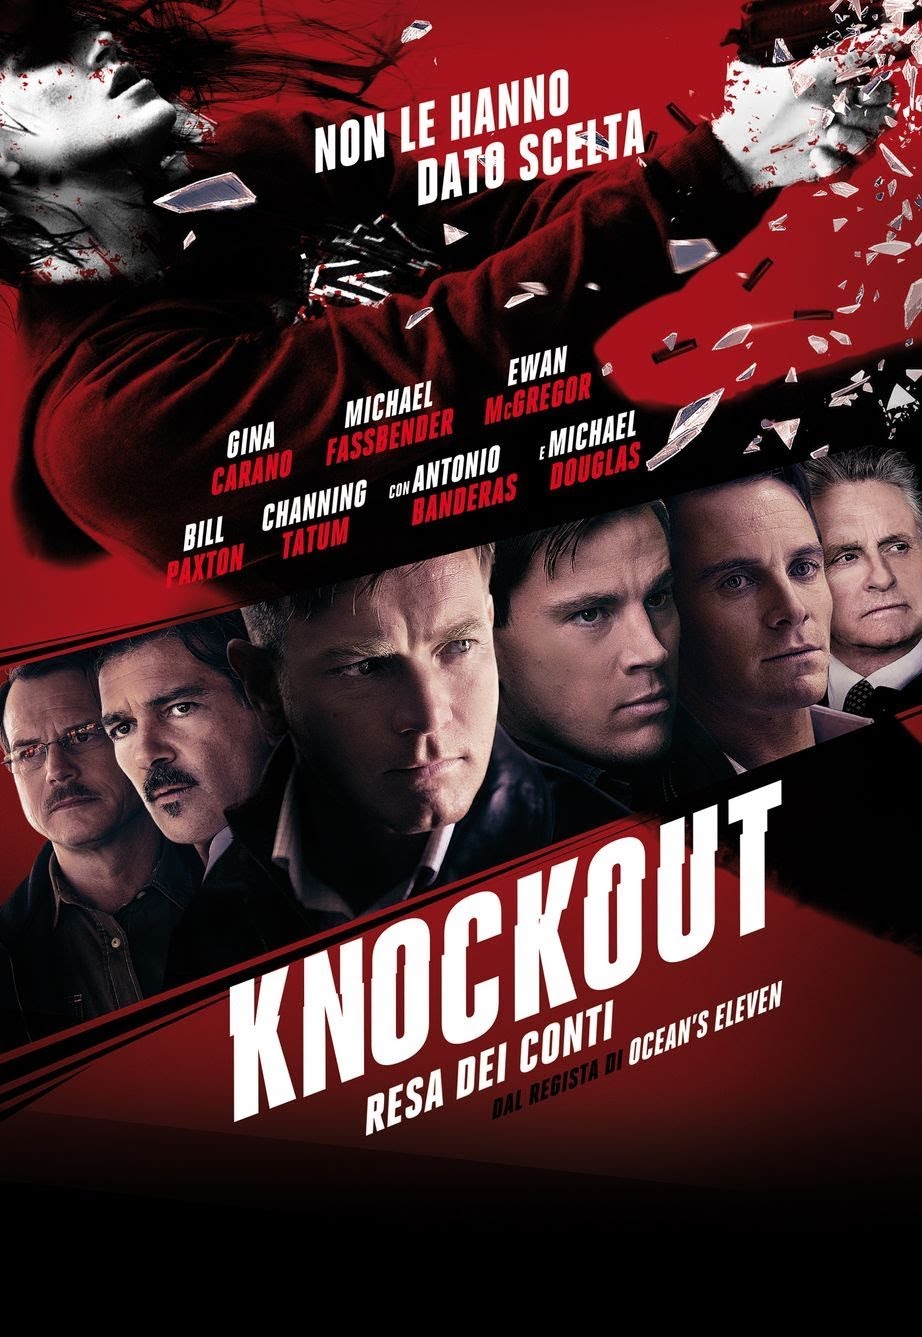 Knockout – Resa dei conti [HD] (2012)